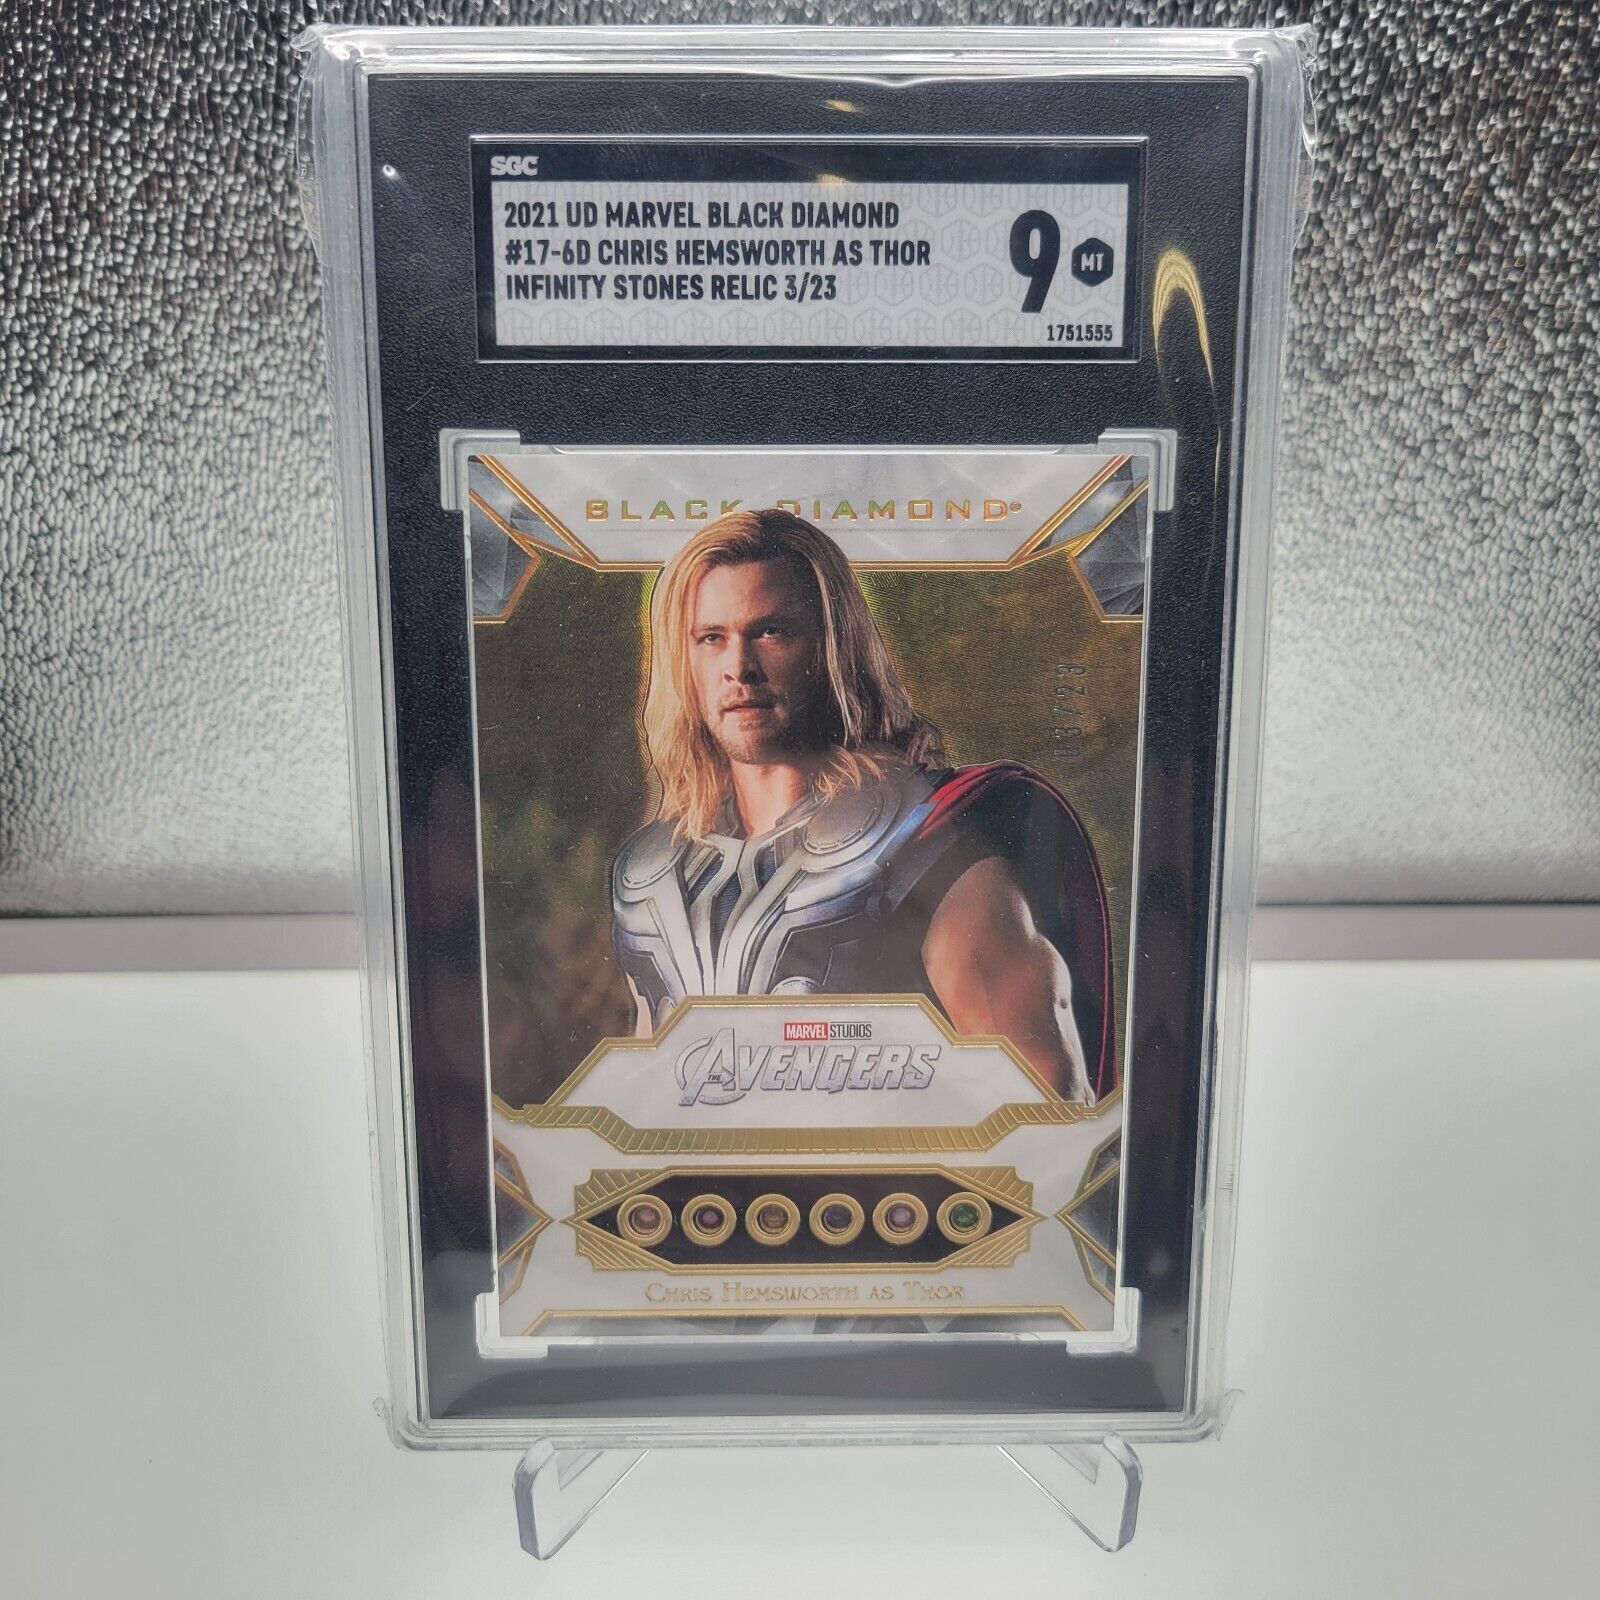 2021 UD Marvel Black Diamond Thor Chris Hemsworth Relic 3/23 SGC 9 Card